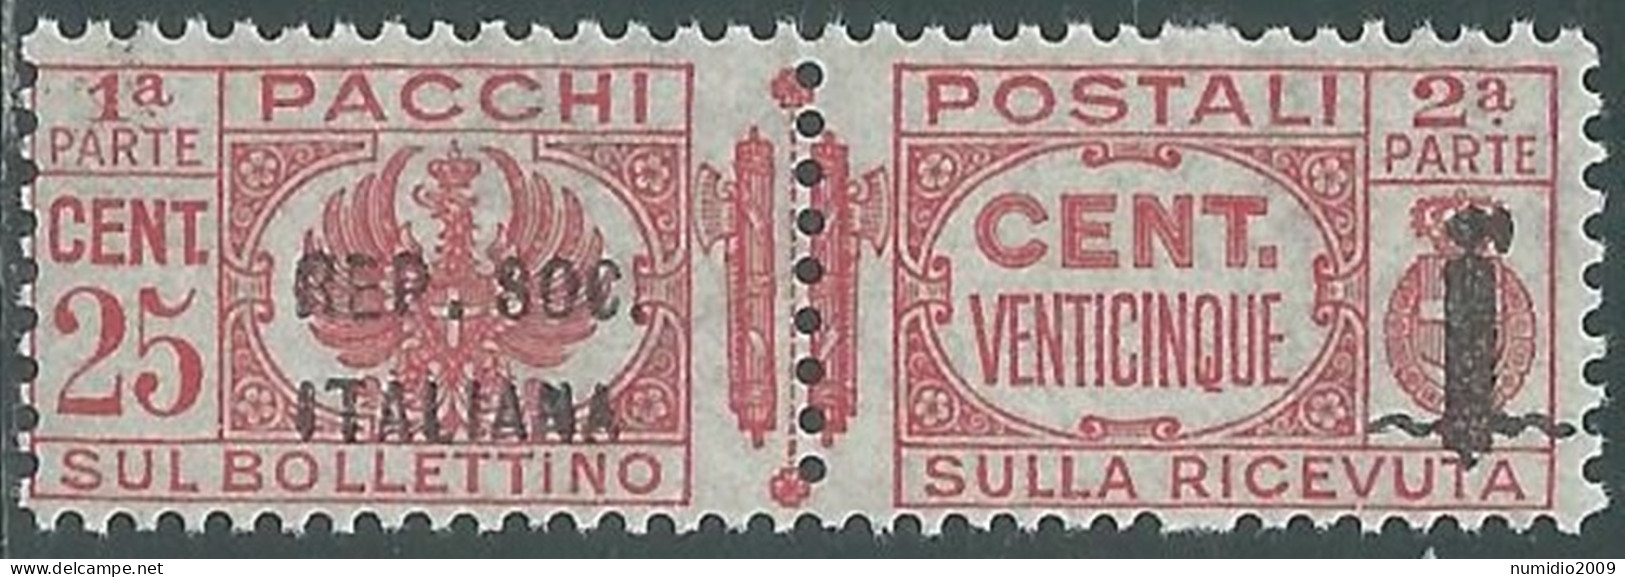 1944 RSI PACCHI POSTALI 25 CENT MNH ** - P31-7 - Postal Parcels